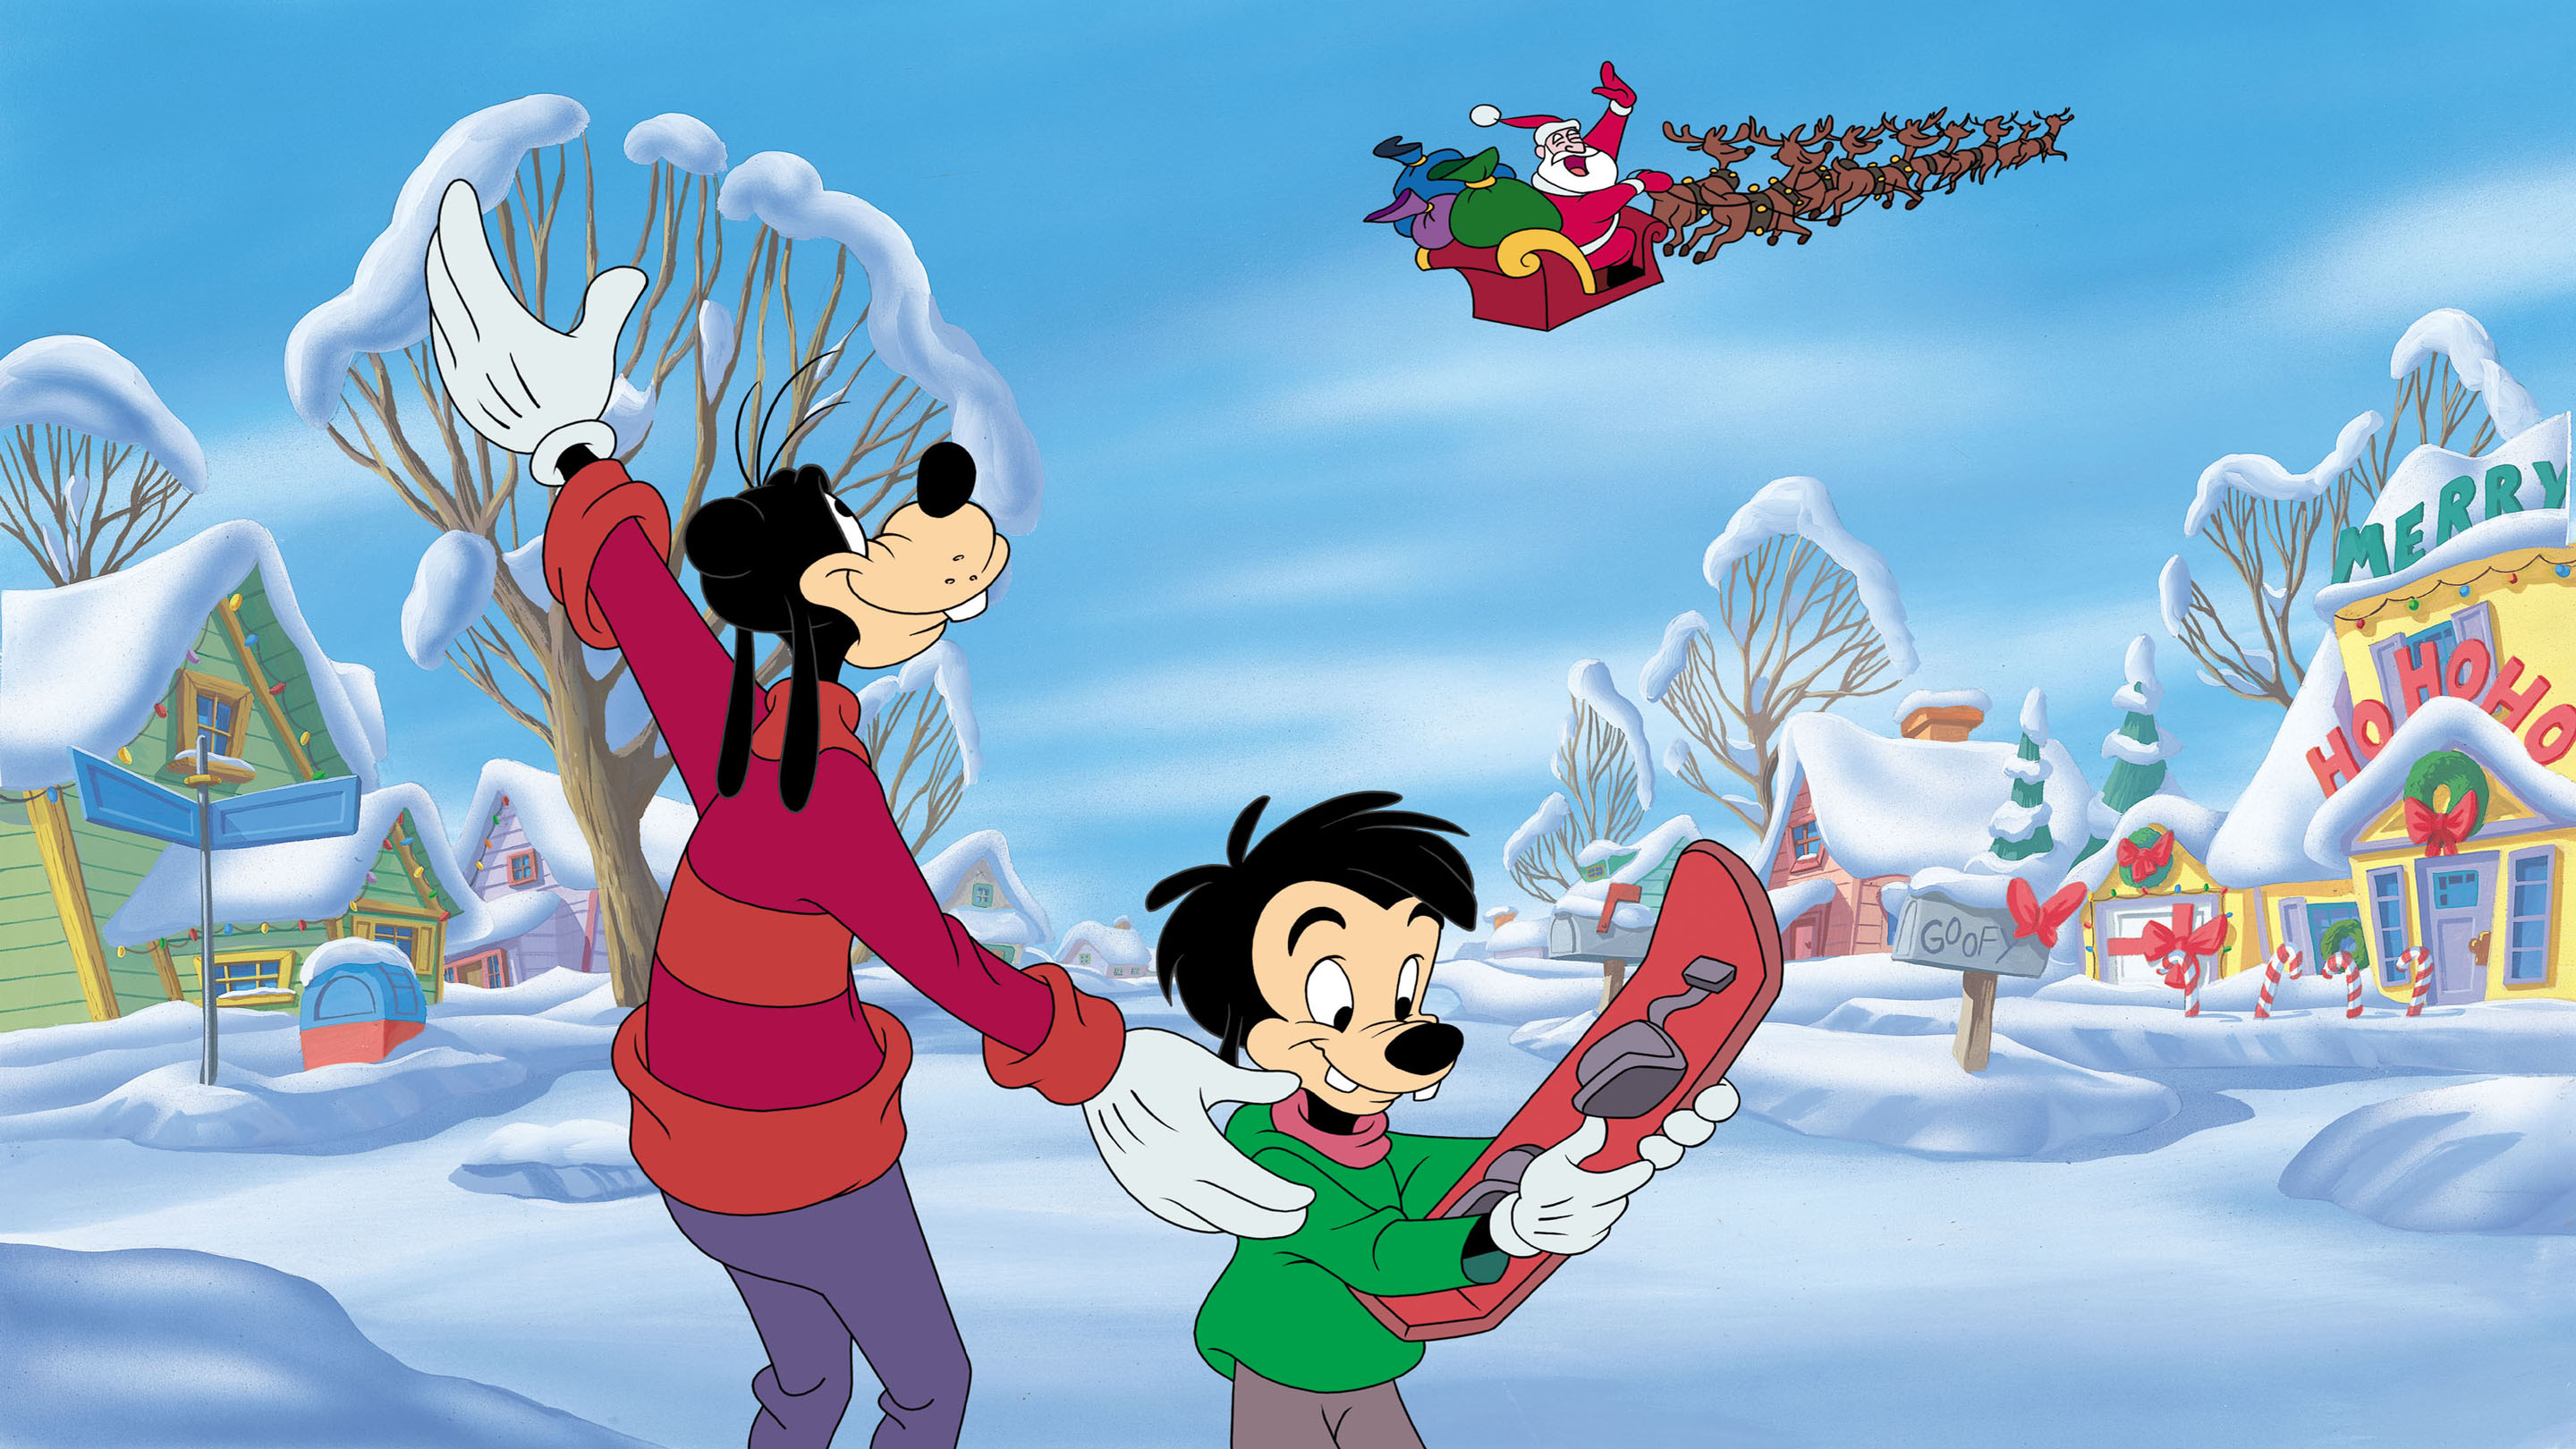 Goofy Cartoon Christmas Gifts From Santa Claus Hd Wallpapers 2880x1620